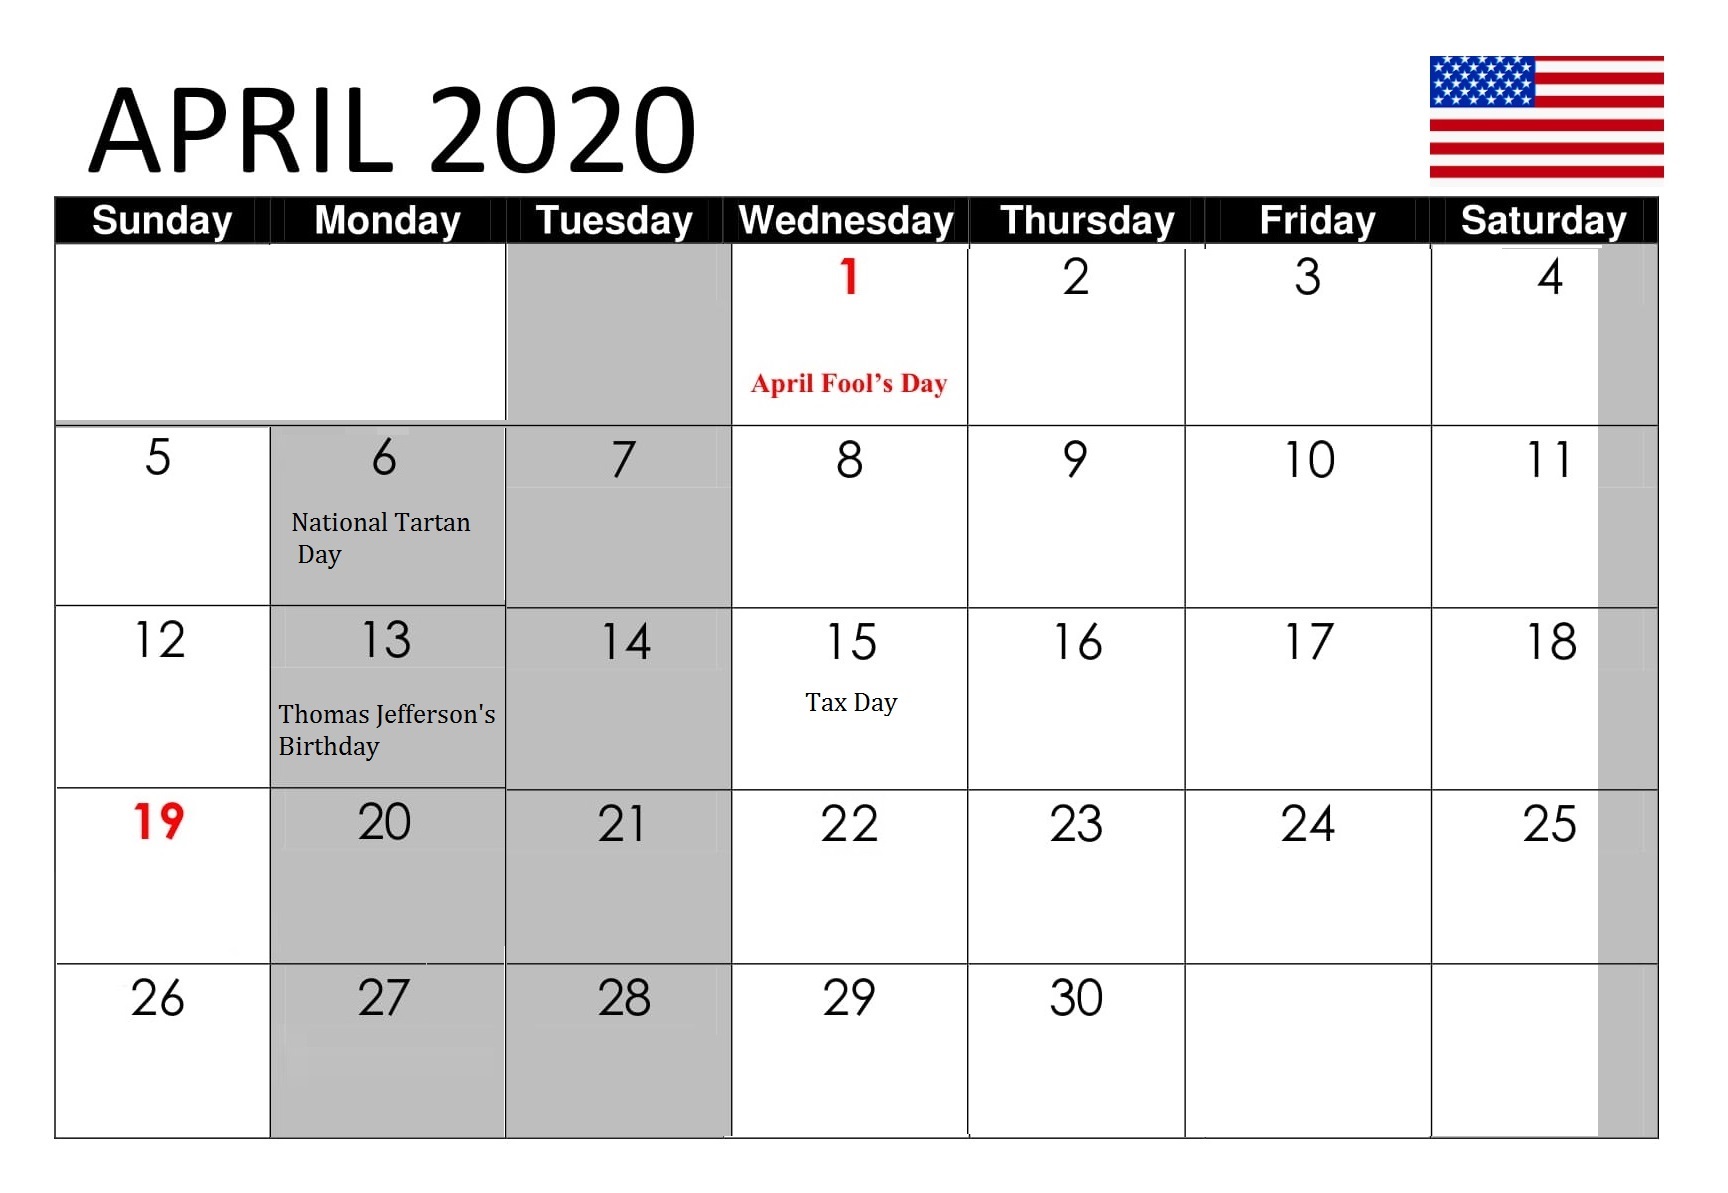 April 2020 USA Bank Holidays